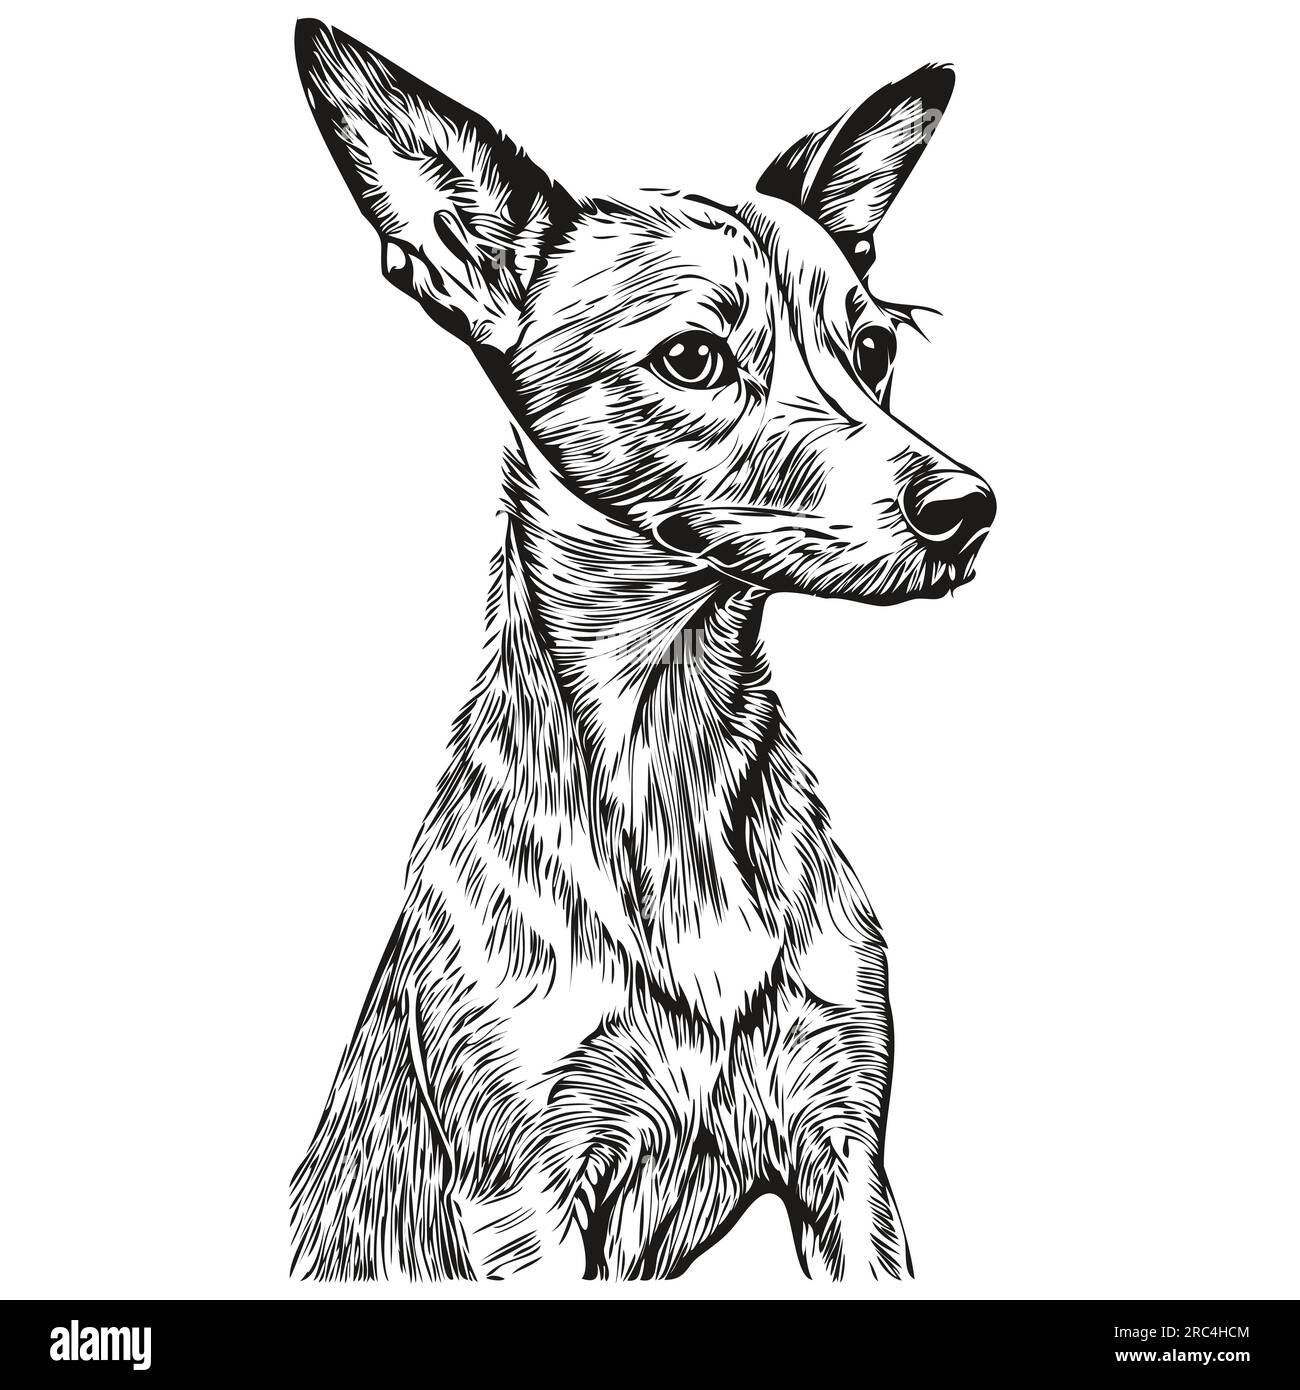 Italian Greyhound dog realistic pet illustration, hand drawing face ...